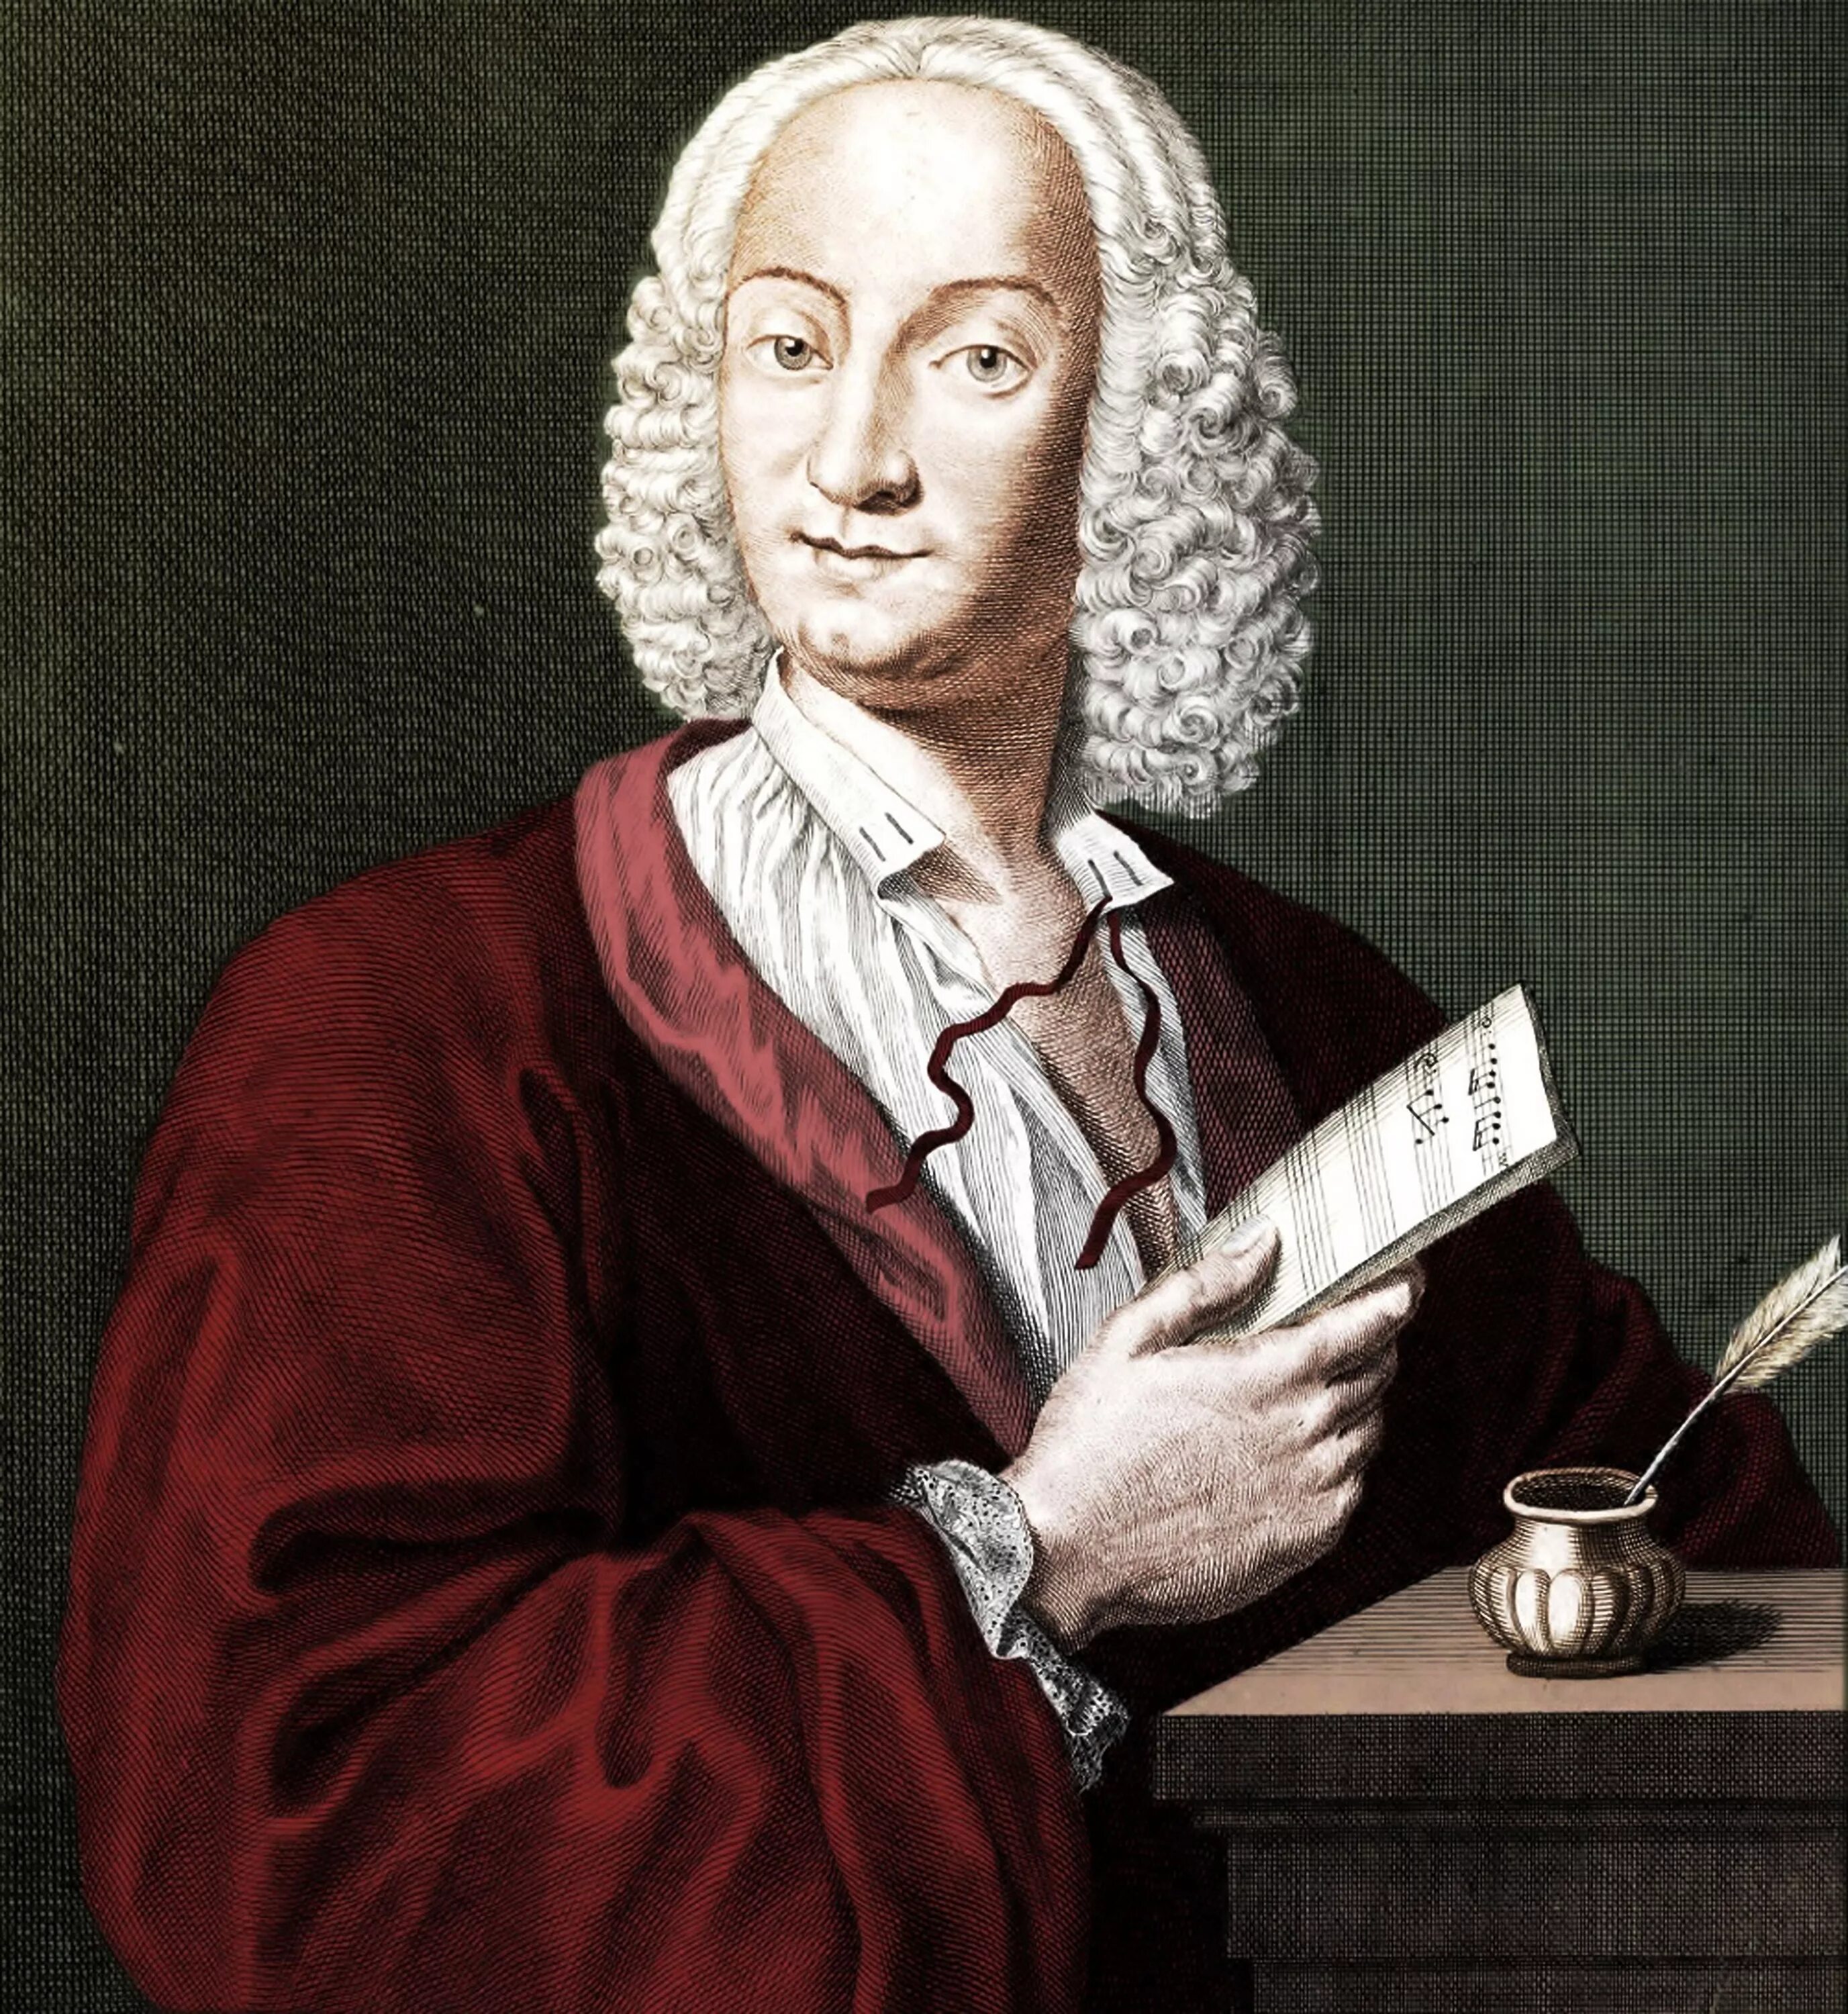 Картинки вивальди. Антонио Вивальди (1678-1741). Антонио Лучо Вивальди (1678-1741). Вивальди композитор. Вивальди портрет композитора.